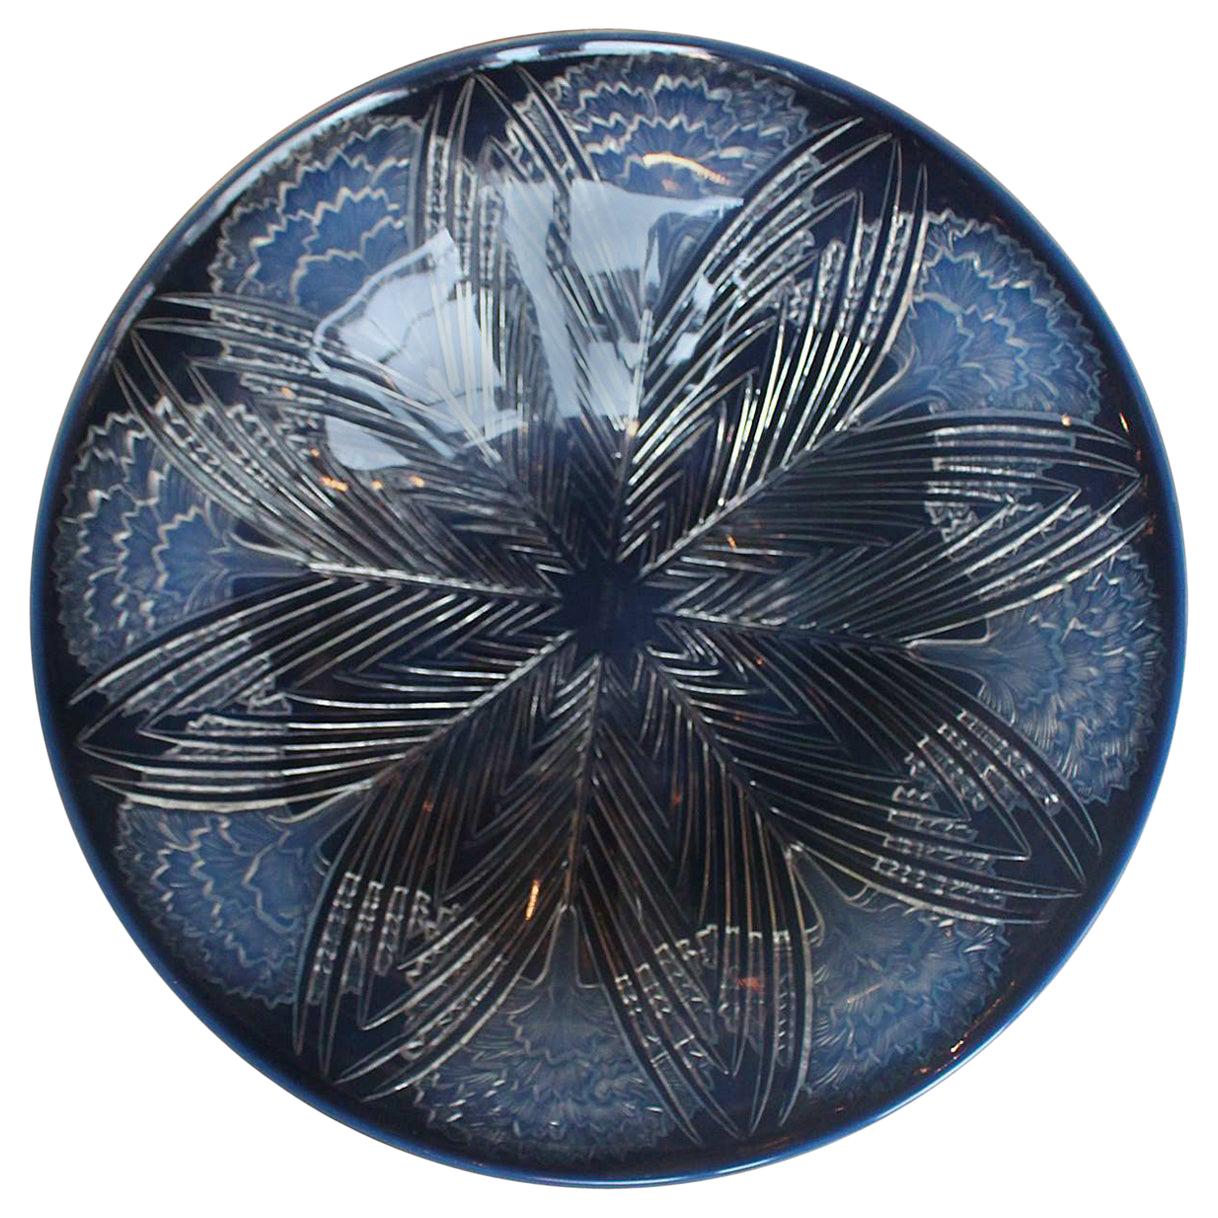 René Lalique "Oeillets" Blue Opalescent Geometric Patterned Charger circa 1930